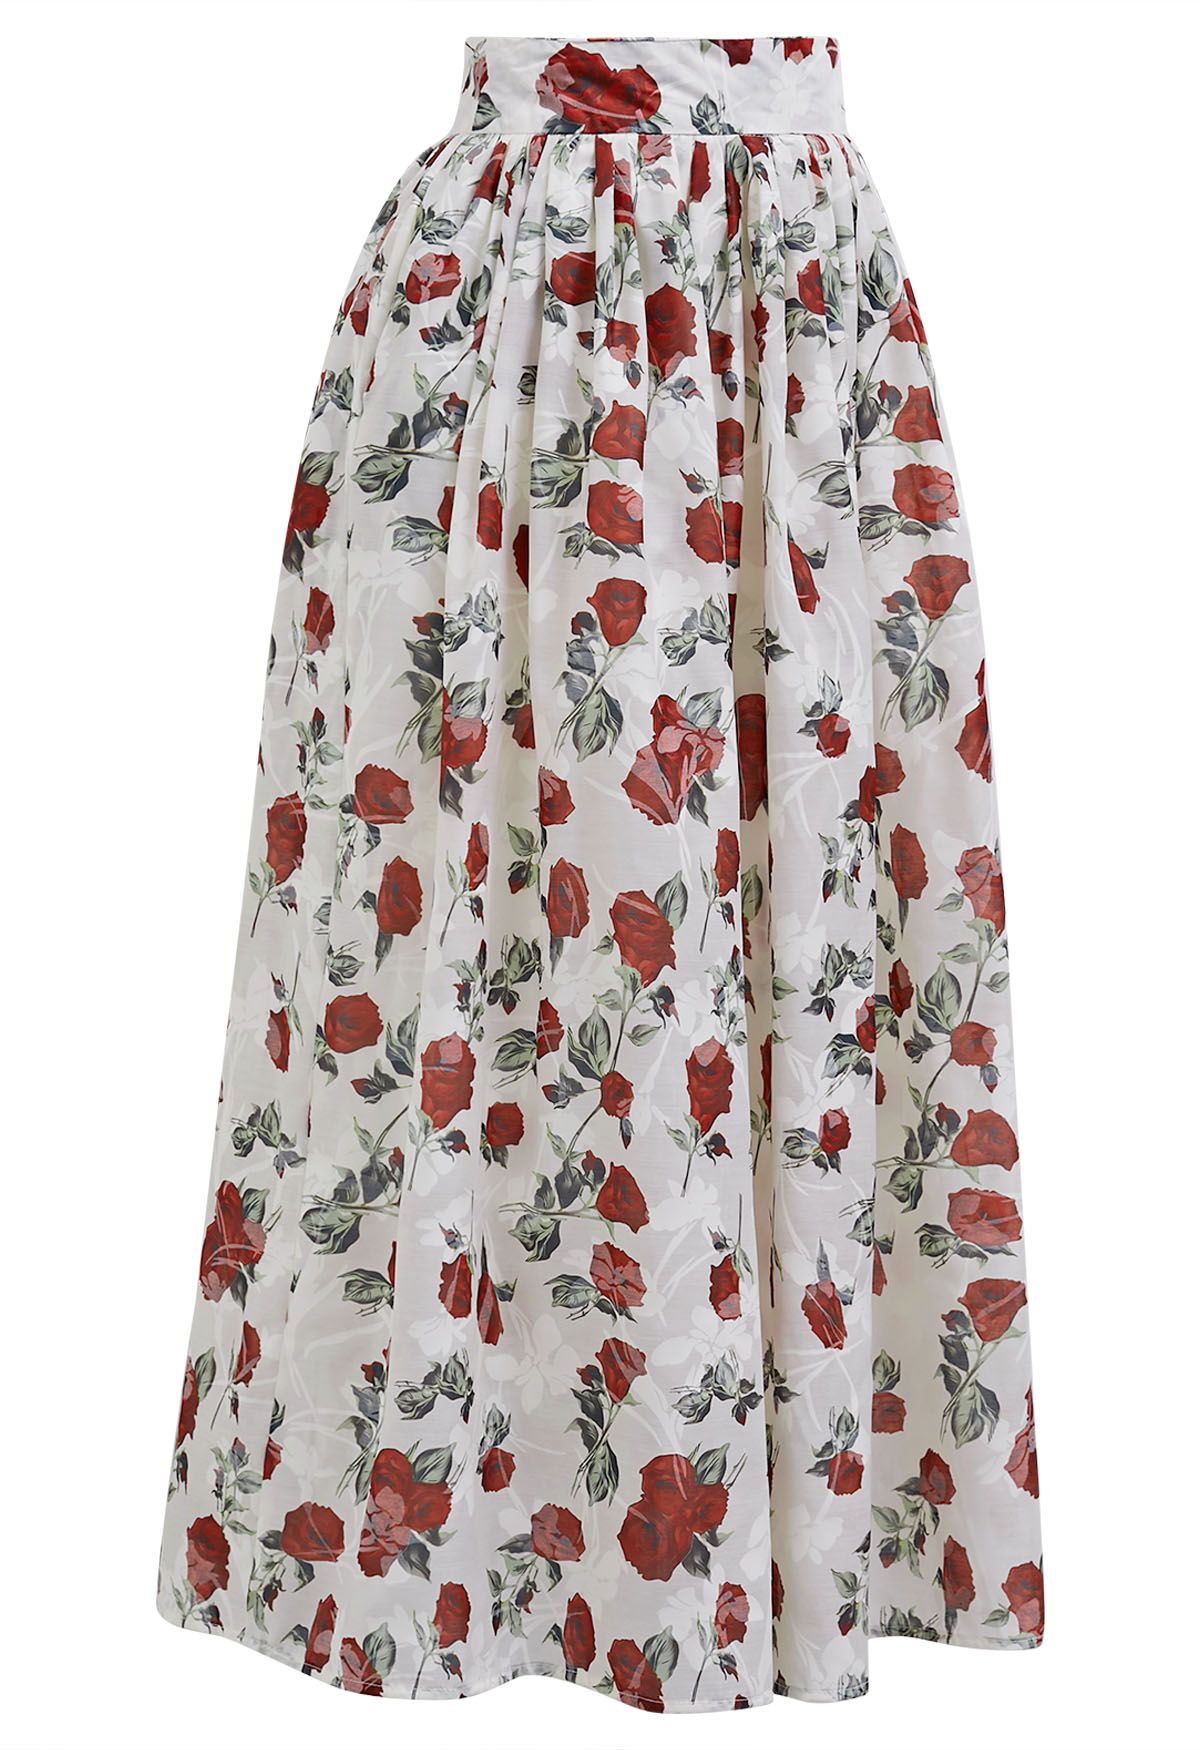 Falda larga cautivadora del jardín de rosas rojas